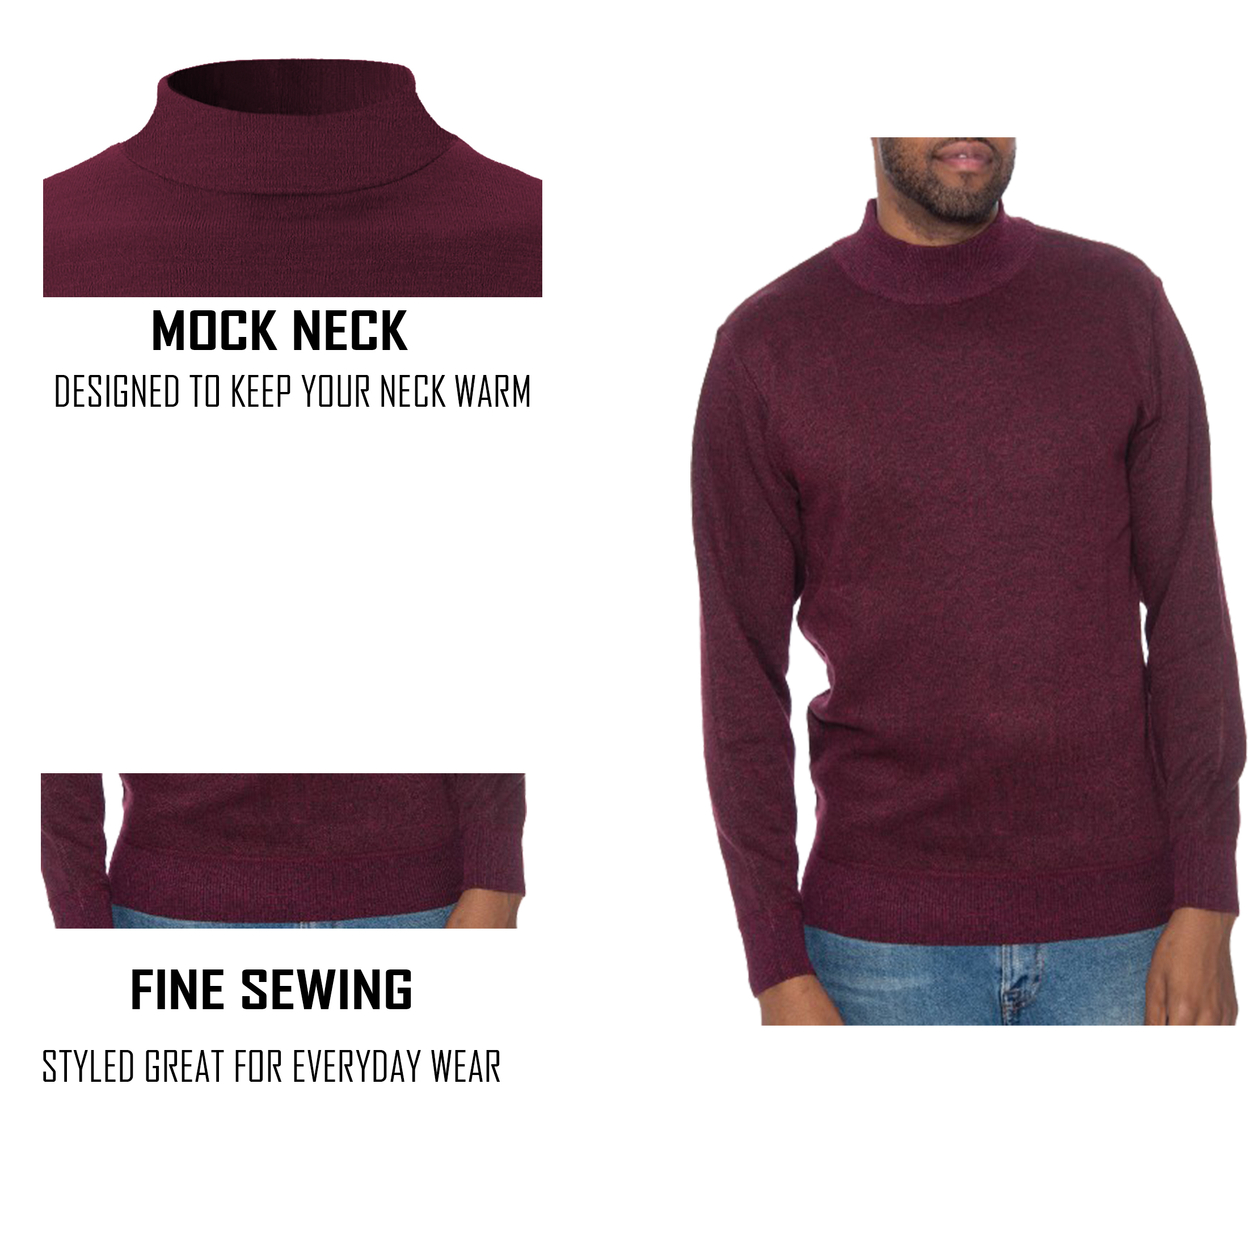 2-Pack: Men's Winter Warm Cozy Knit Slim Fit Mock Neck Sweater - Black & Black, Large